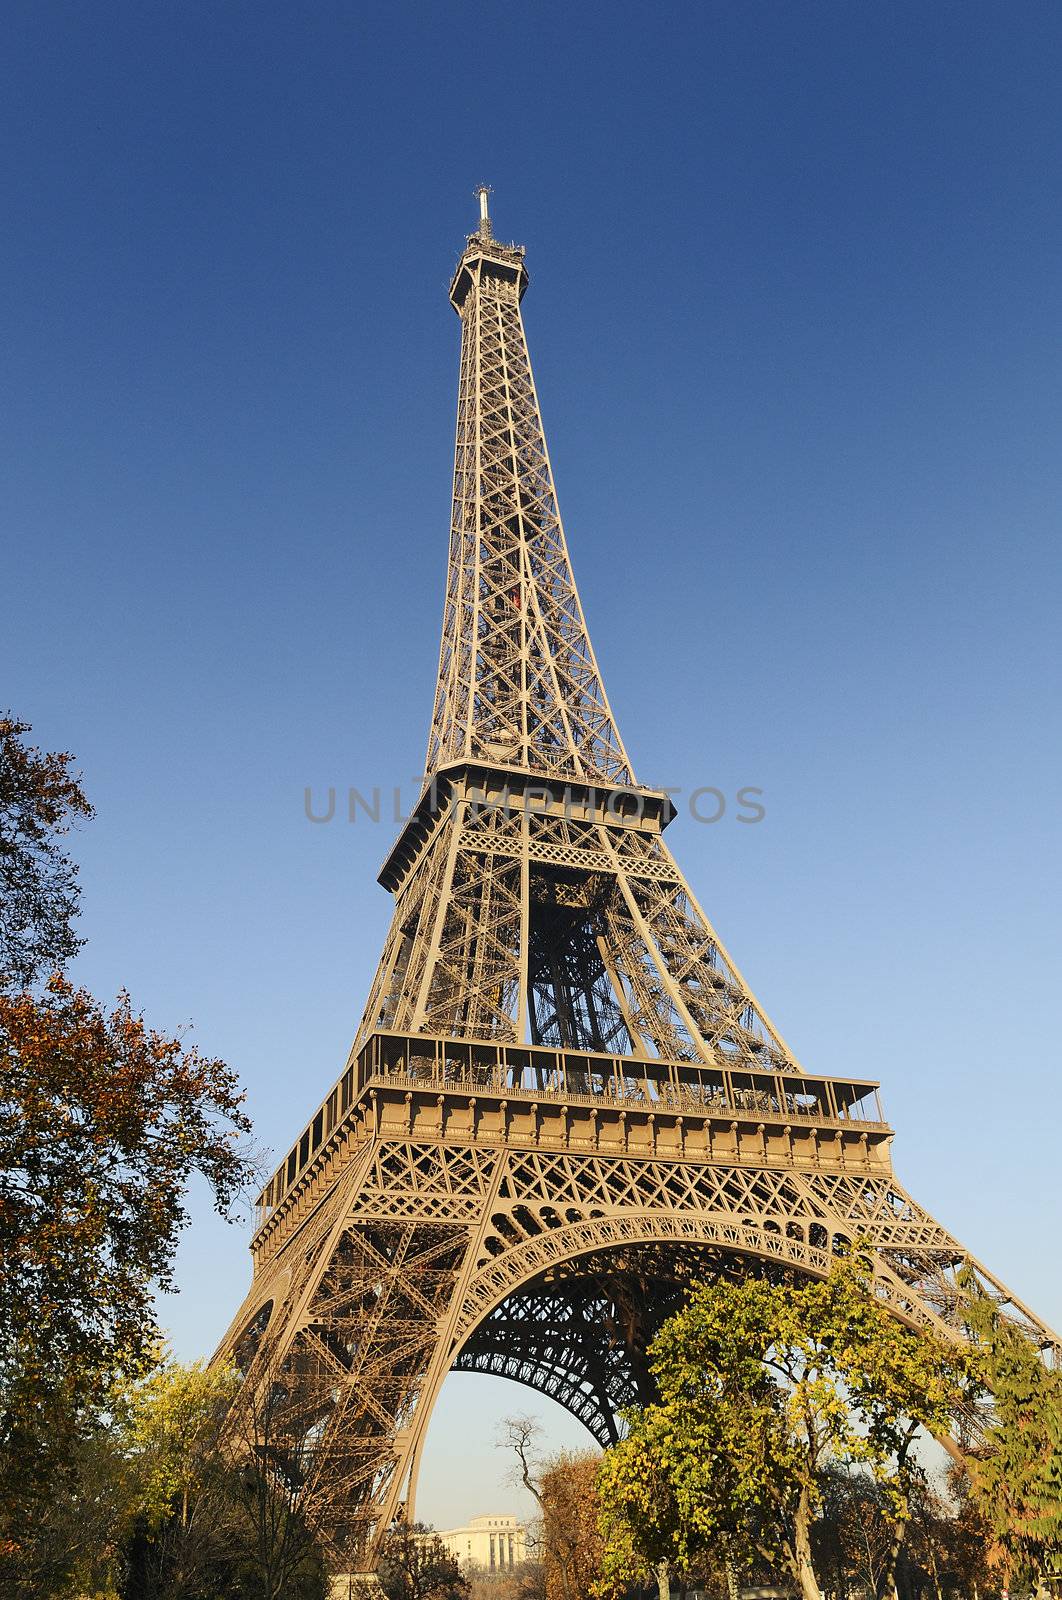 The Eiffel Tower by ventdusud